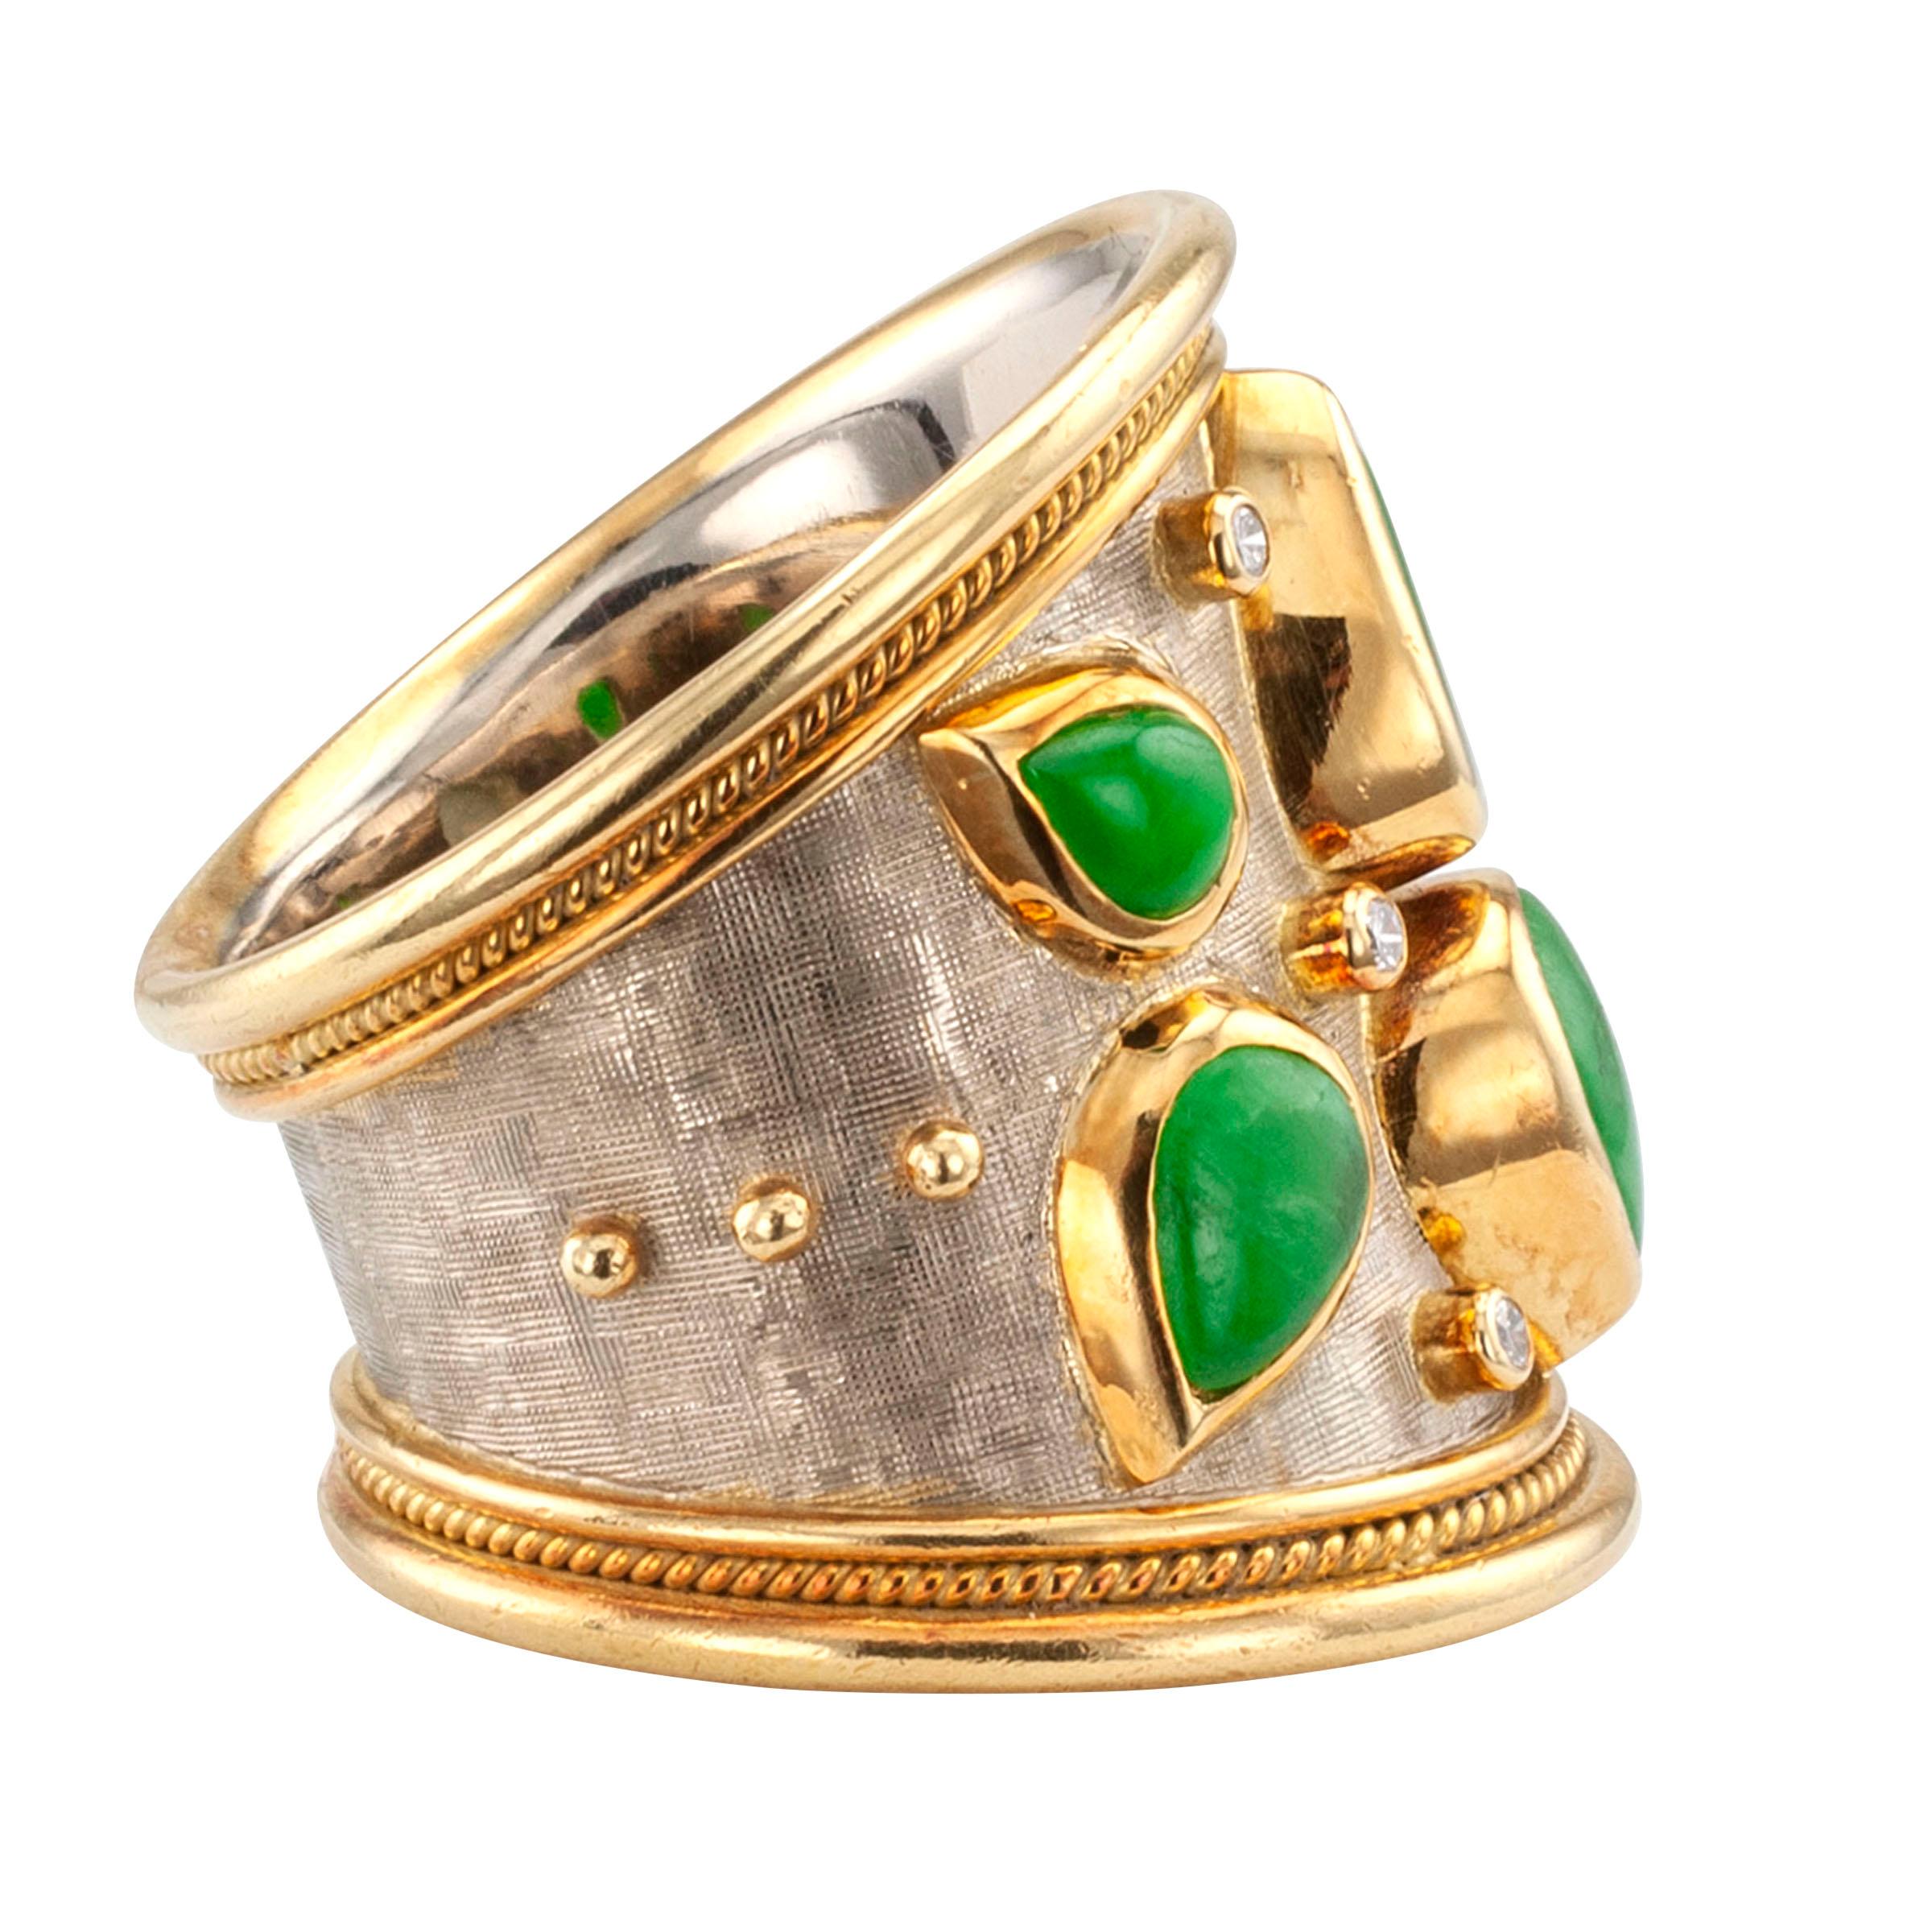 Elizabeth Gage diamond jadeite and gold cigar band ring.

DETAILS:
Elizabeth Gage estate diamond and jadeite cigar band gold ring.
DIAMONDS: six round brilliant-cut totaling approximately 0.09 carat.
GEMSTONES: six green, teardrop-shaped jadeite of